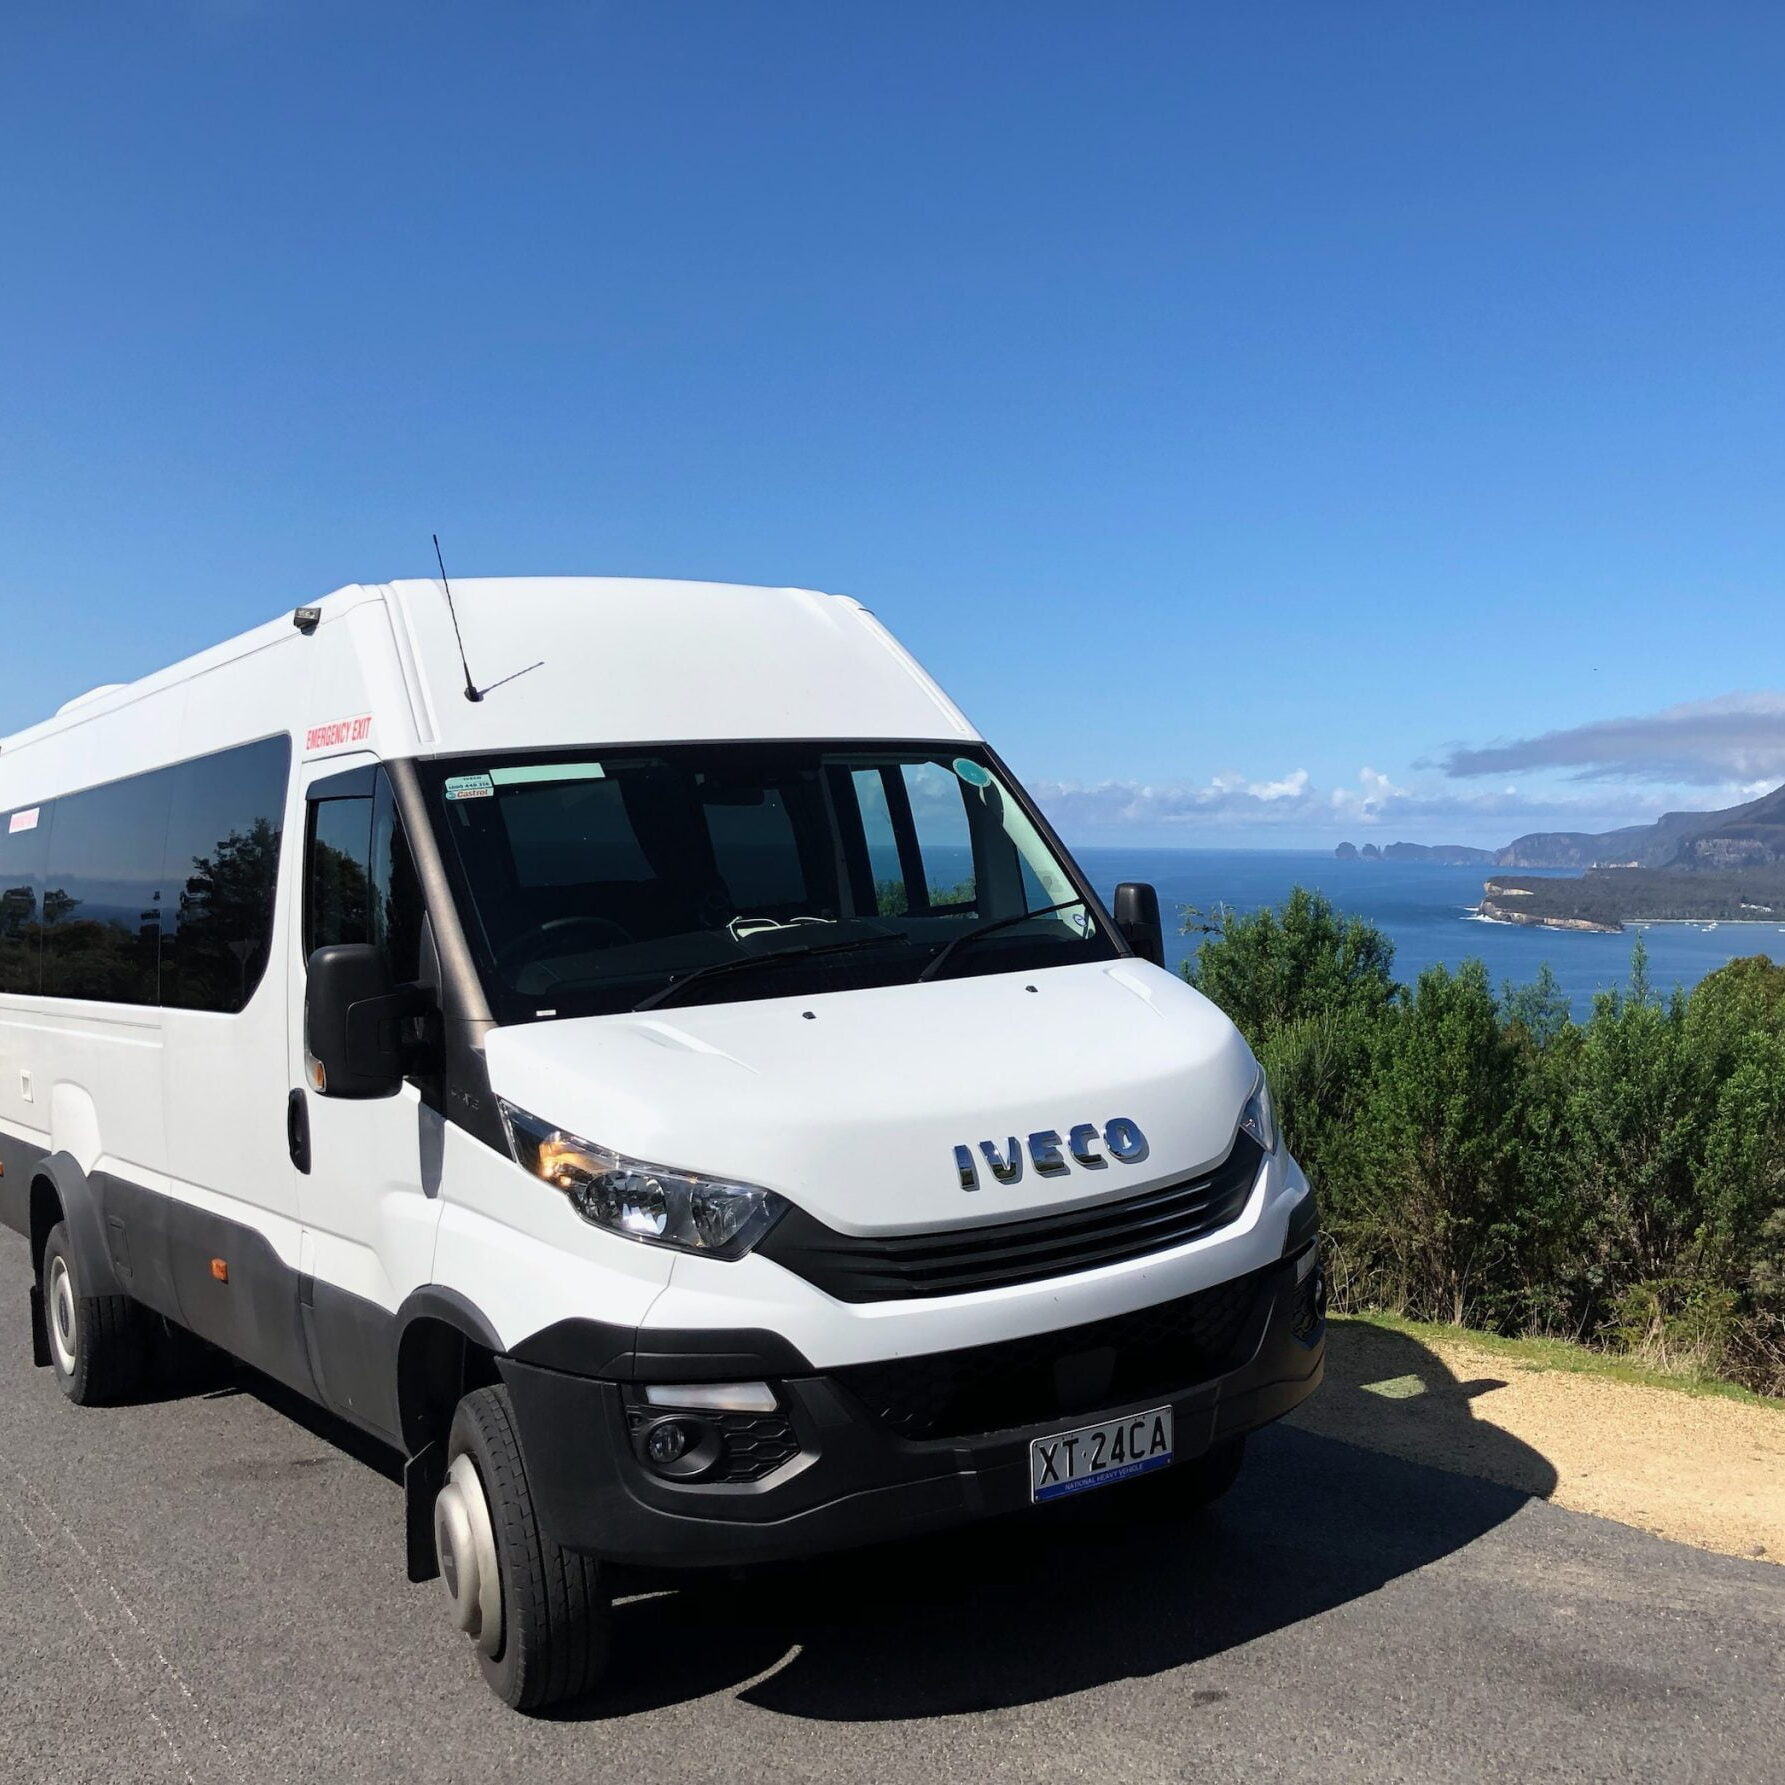 Tours around Tasmania IVECO bus